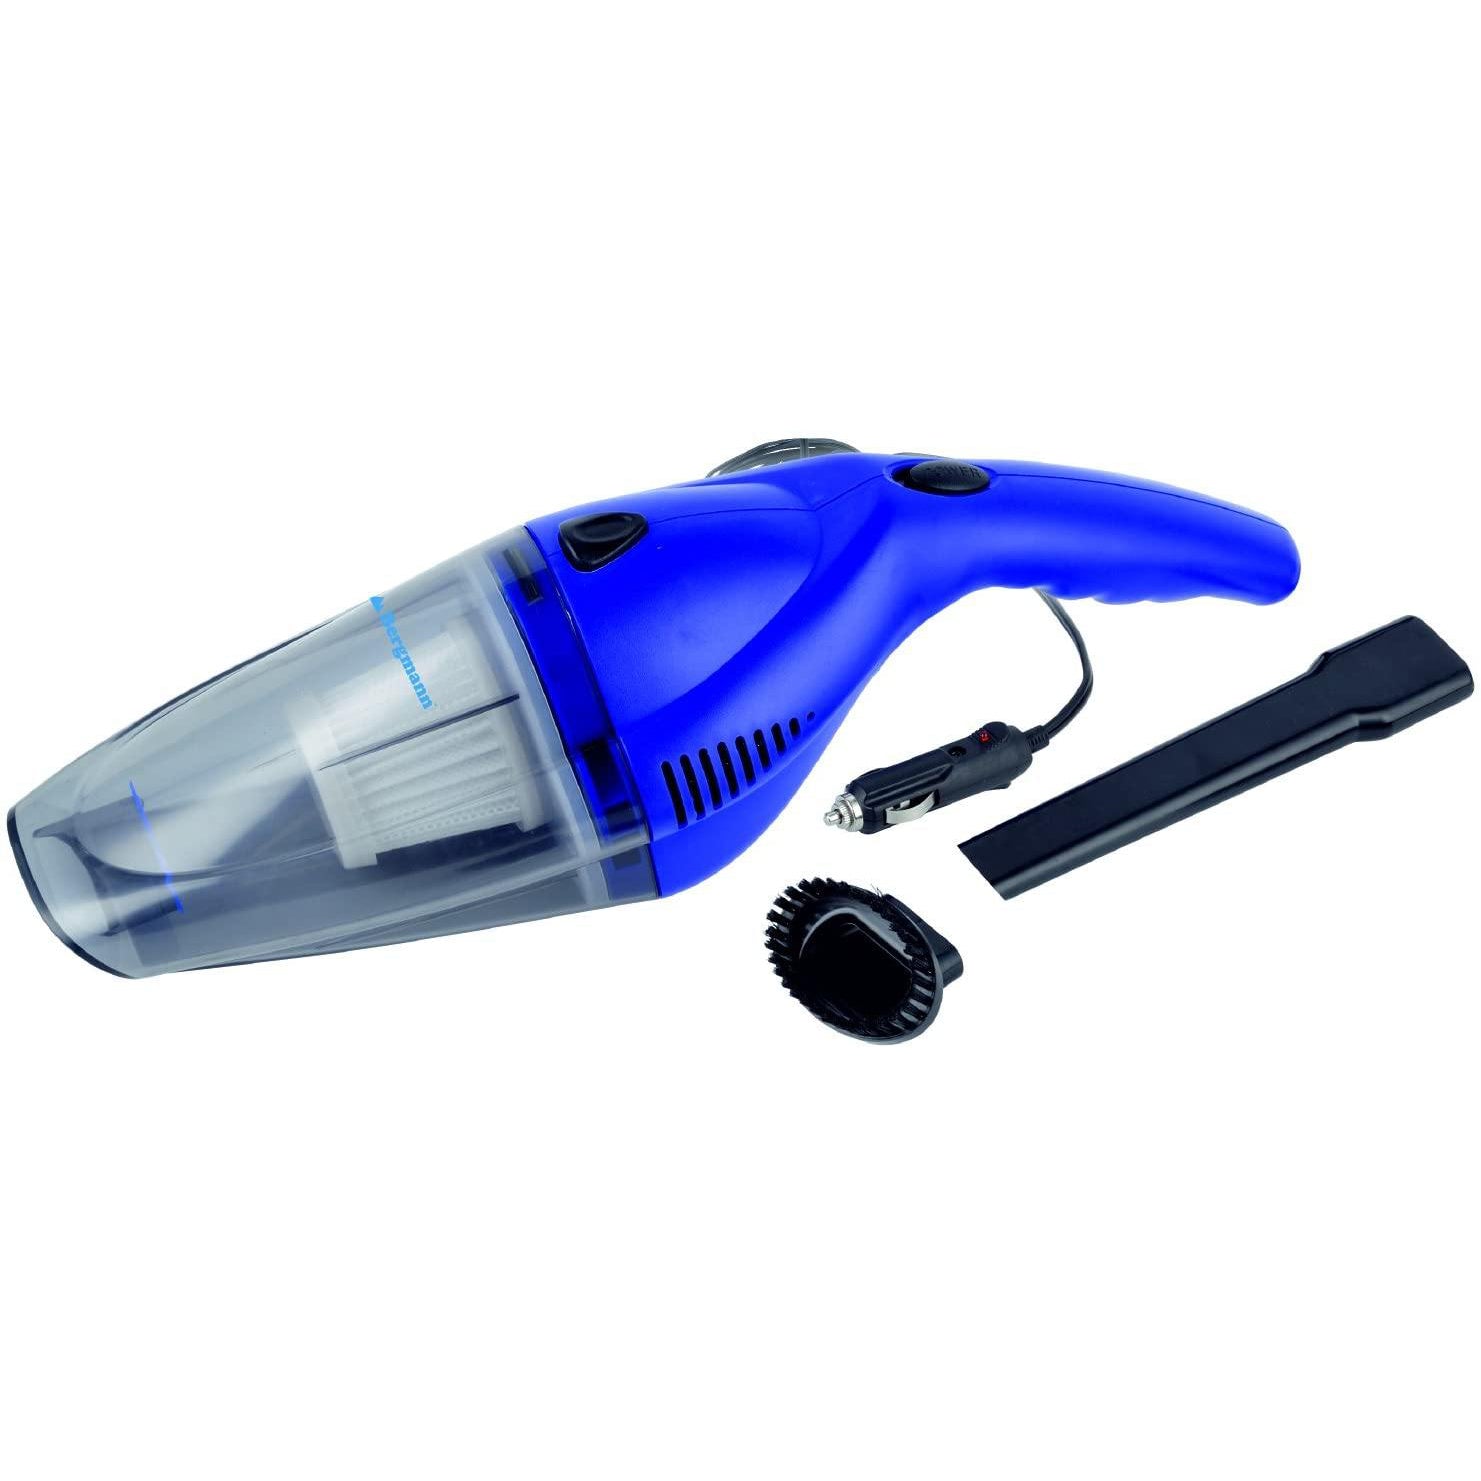 Bergmann Tornado Car Vacuum Cleaner (Blue)